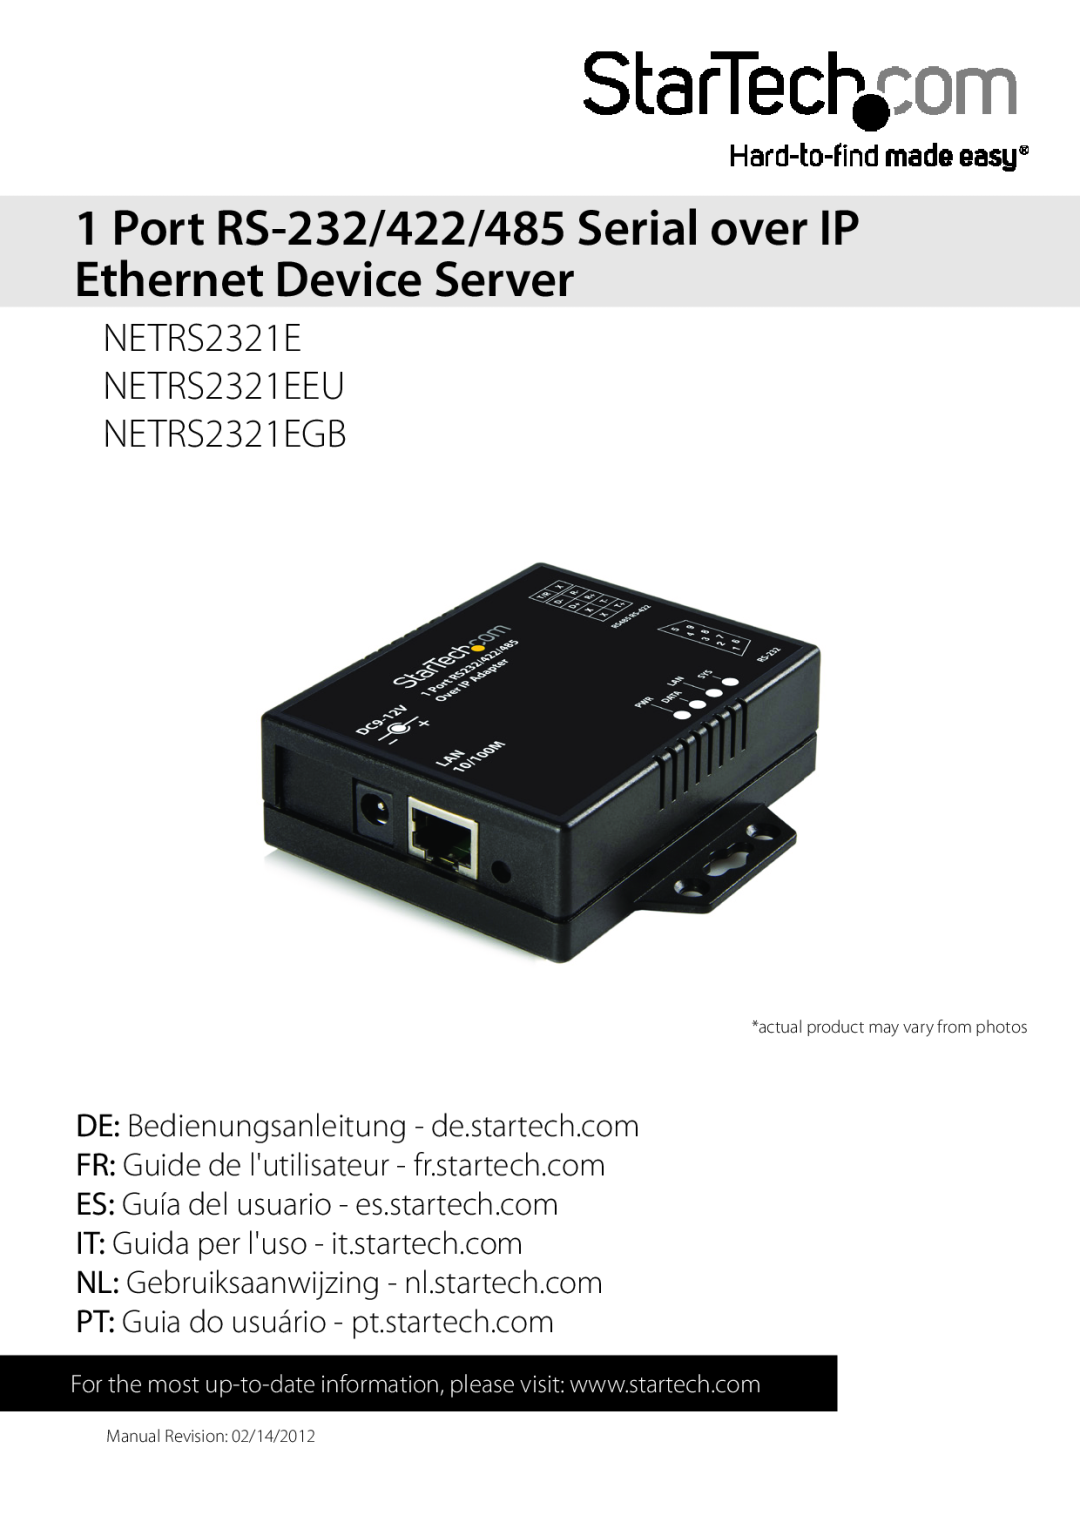 StarTech.com NETRS2321E manual Port RS-232/422/485 Serial over IP Ethernet Device Server, Manual Revision 02/14/2012 